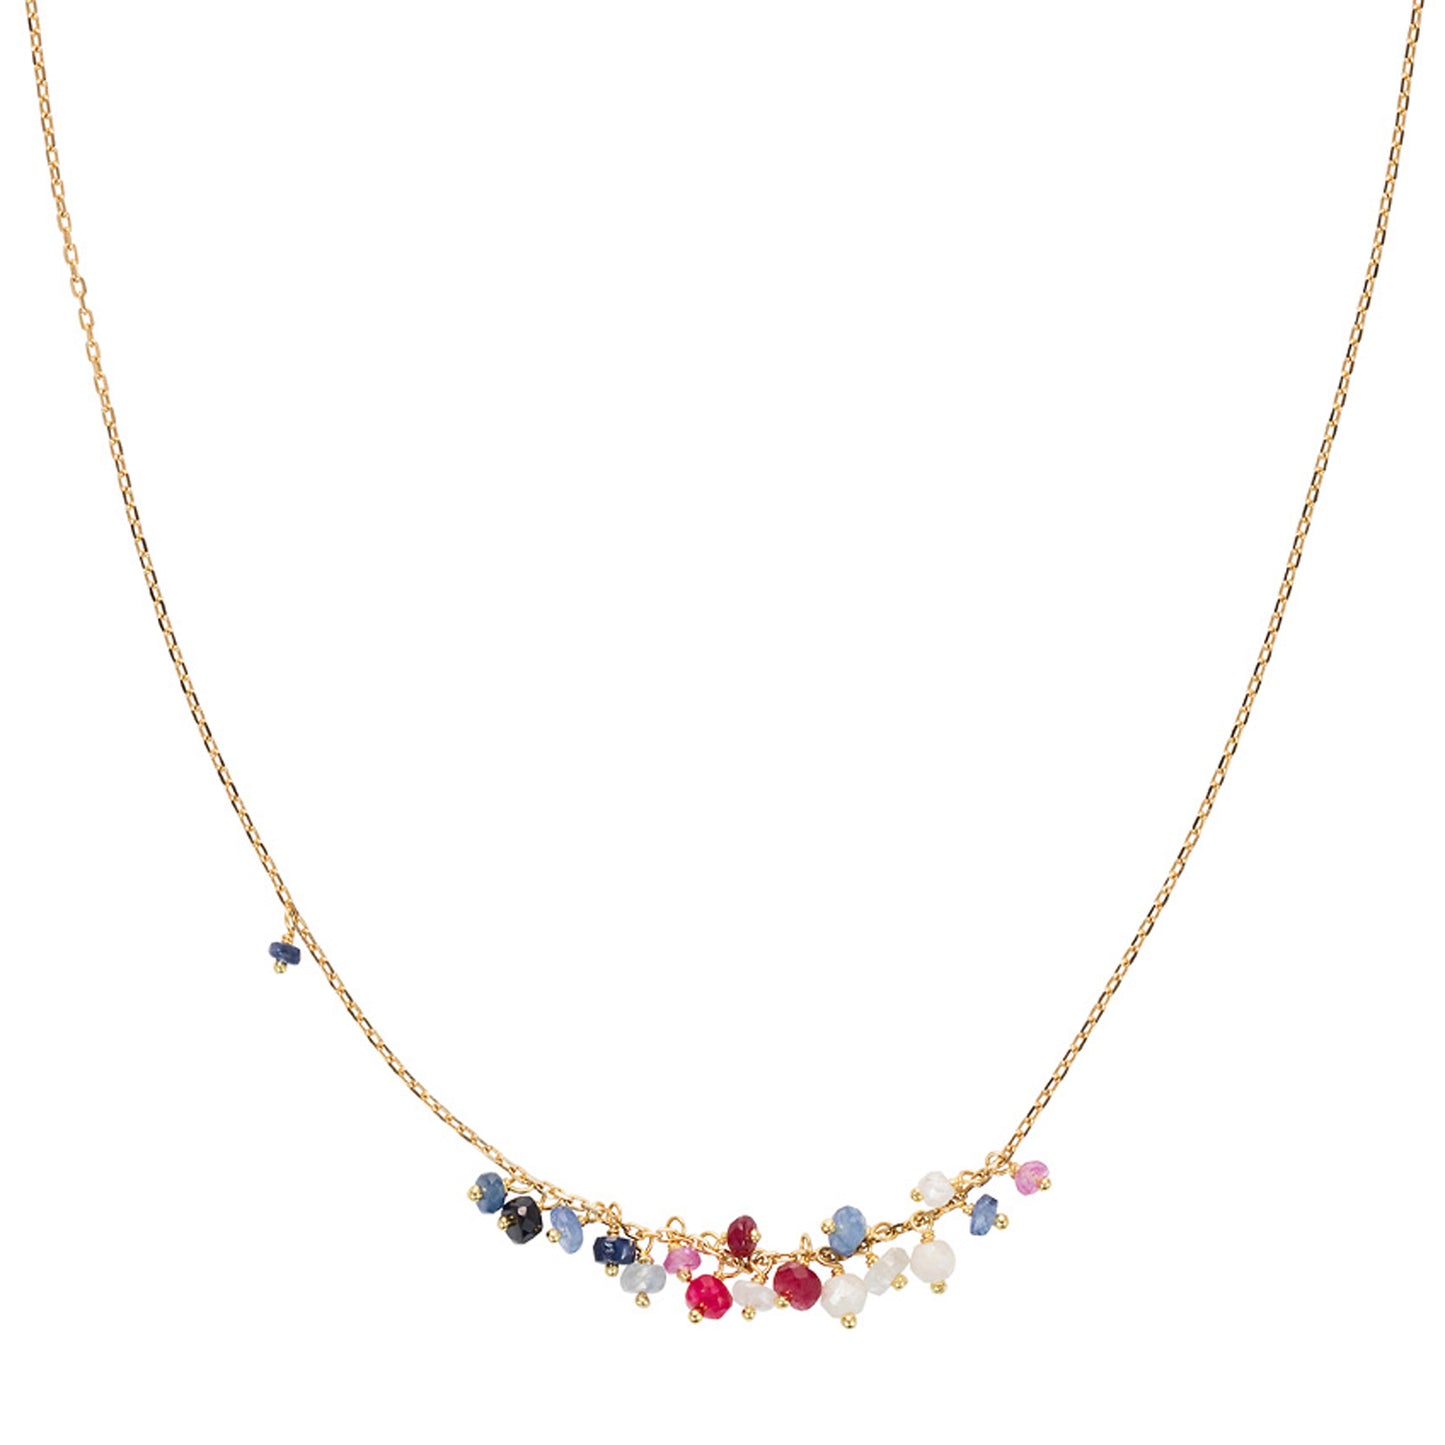 Sale Pogo Punk Ruby Sapphire and Corondum Necklace